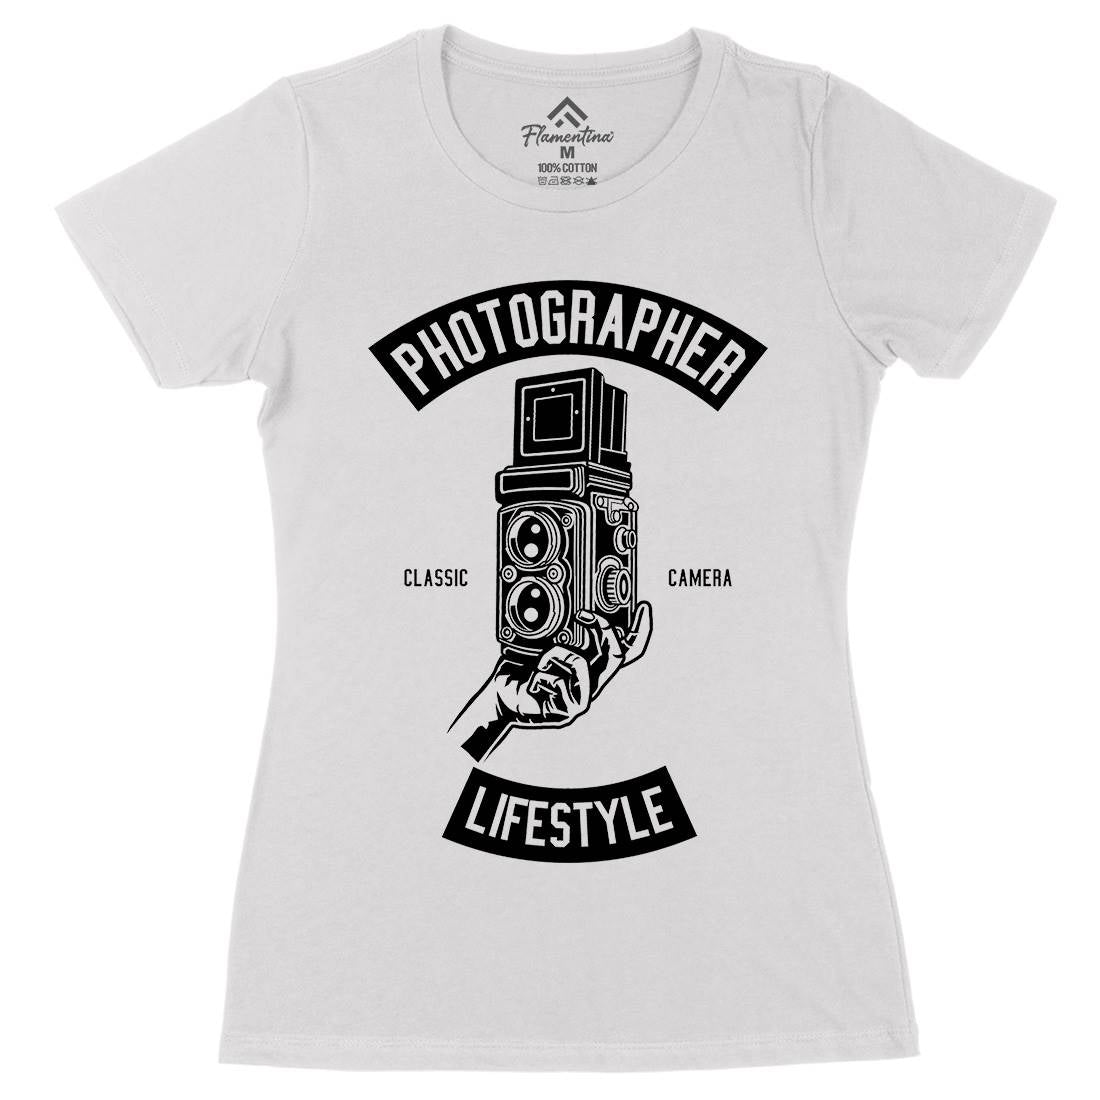 Photographer Lifestyle Womens Organic Crew Neck T-Shirt Media B597